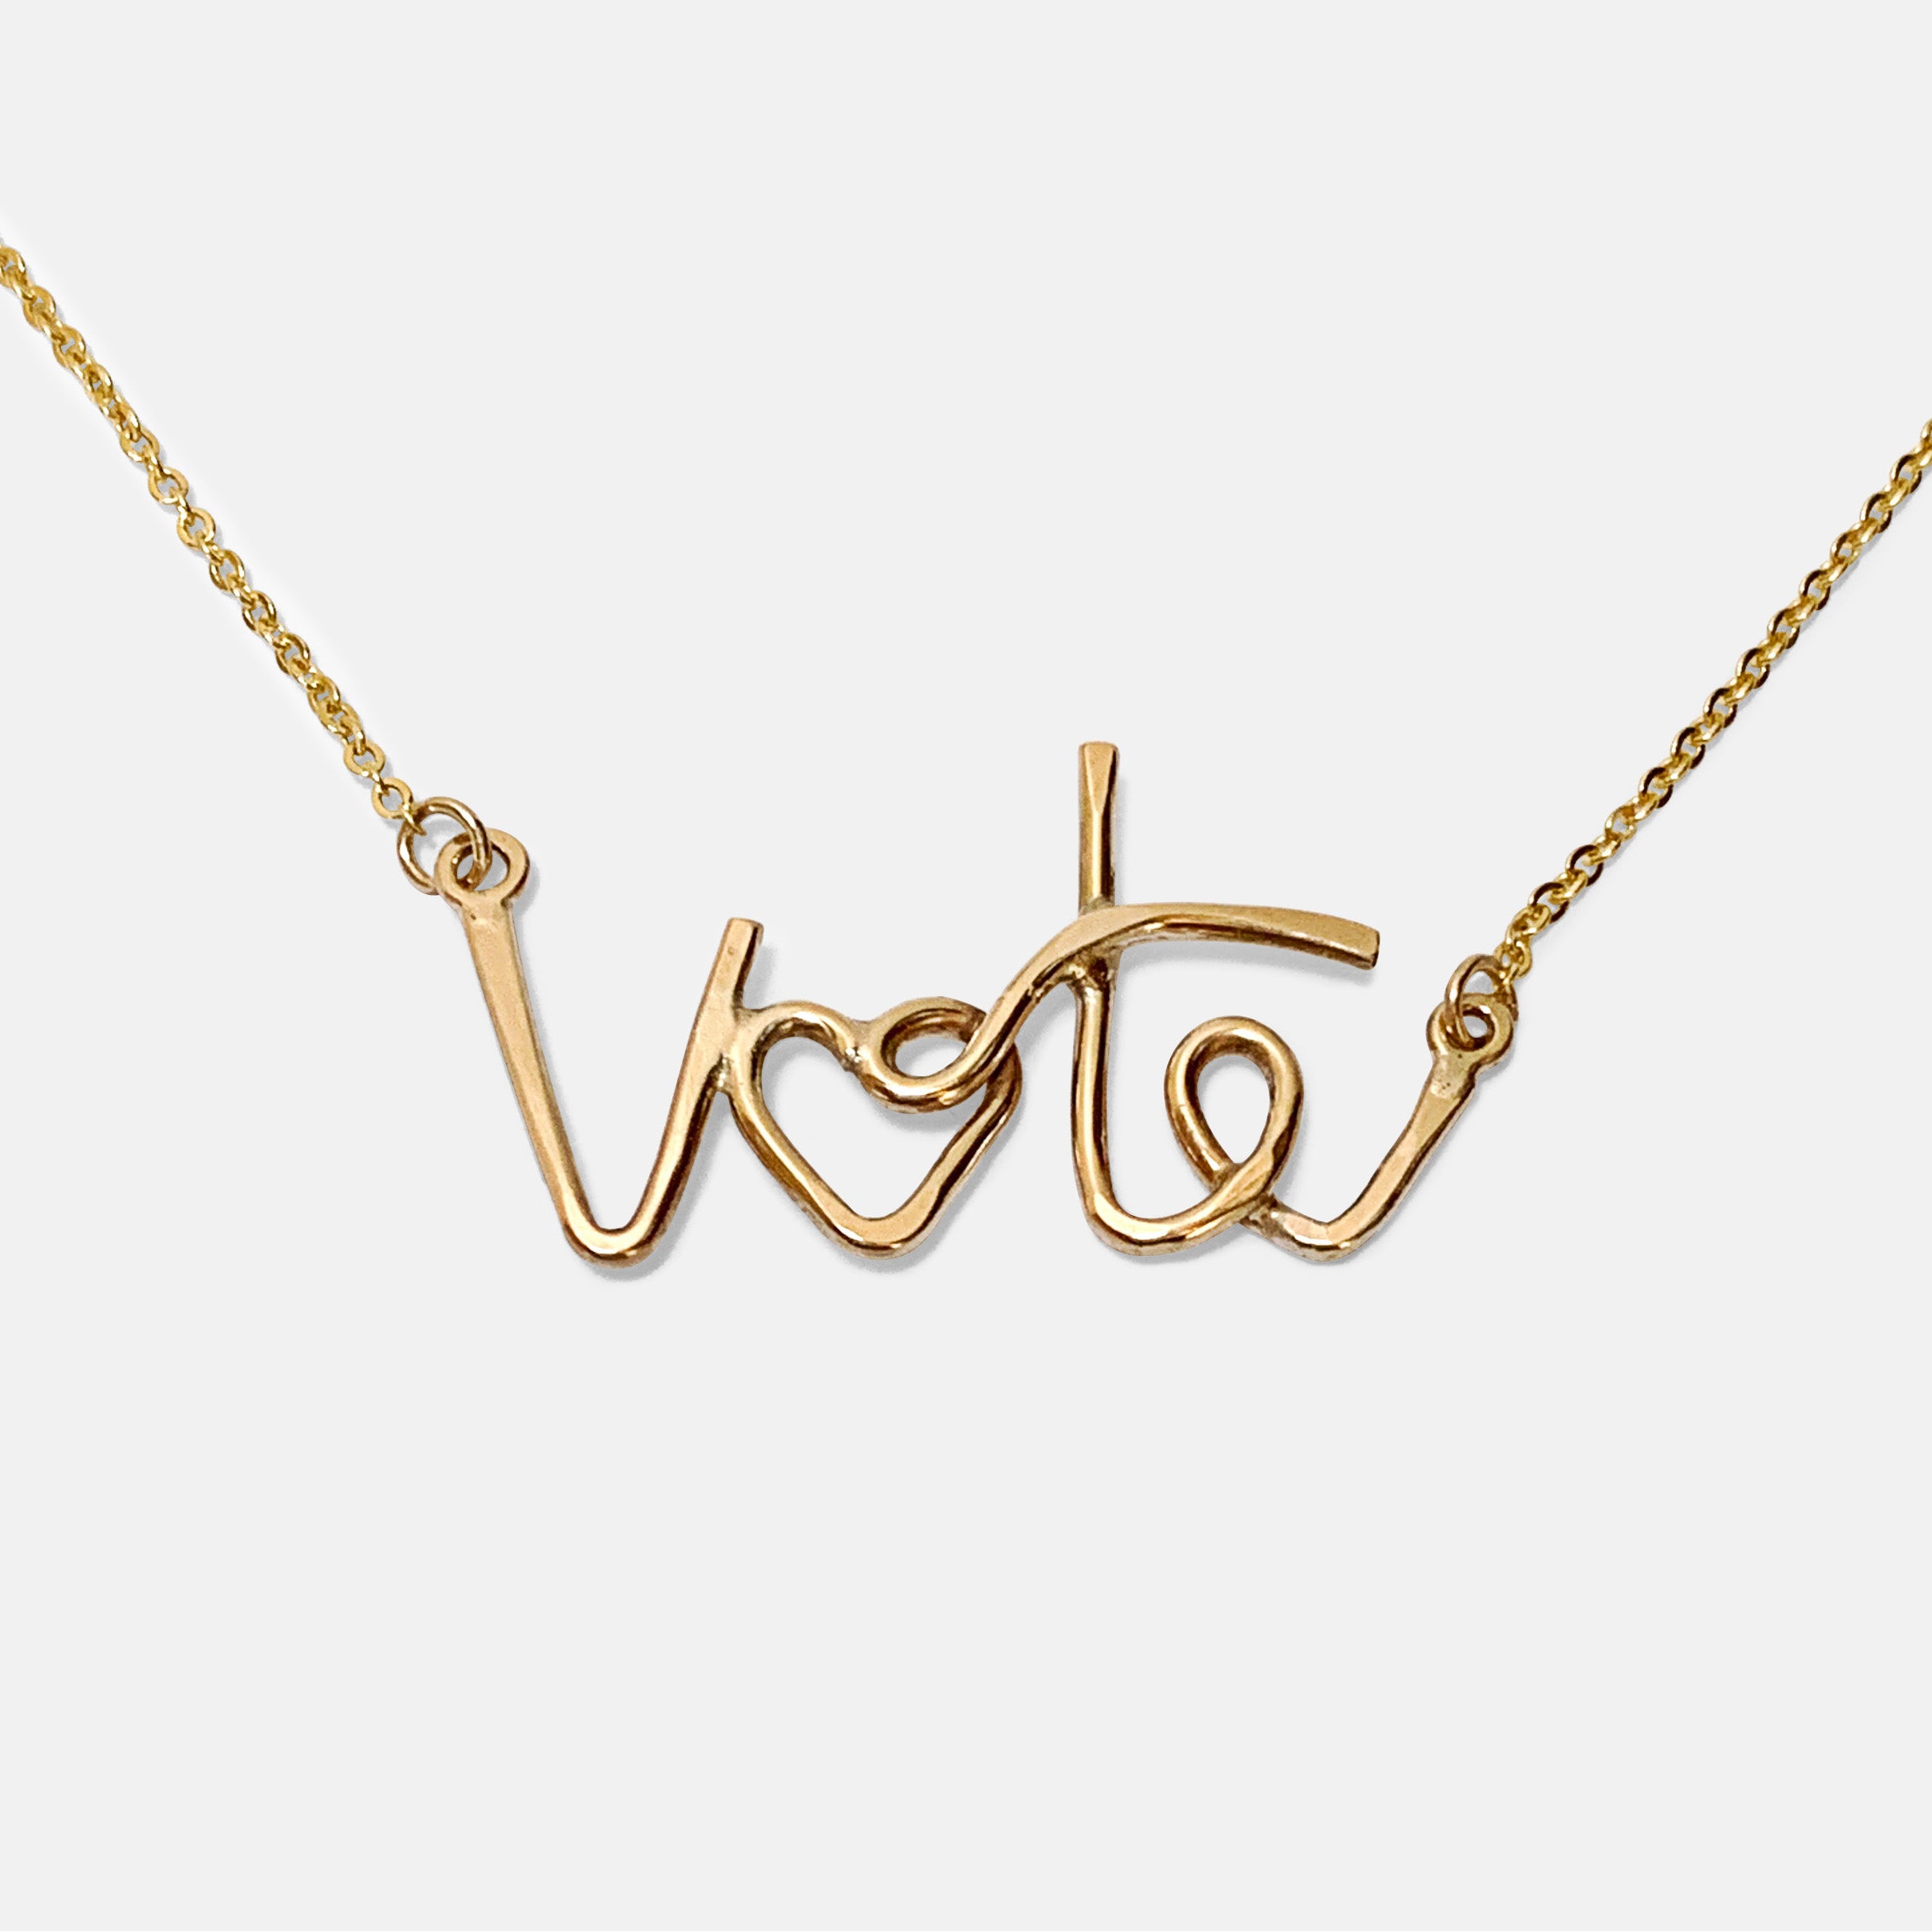 Vote Necklace, closeup image